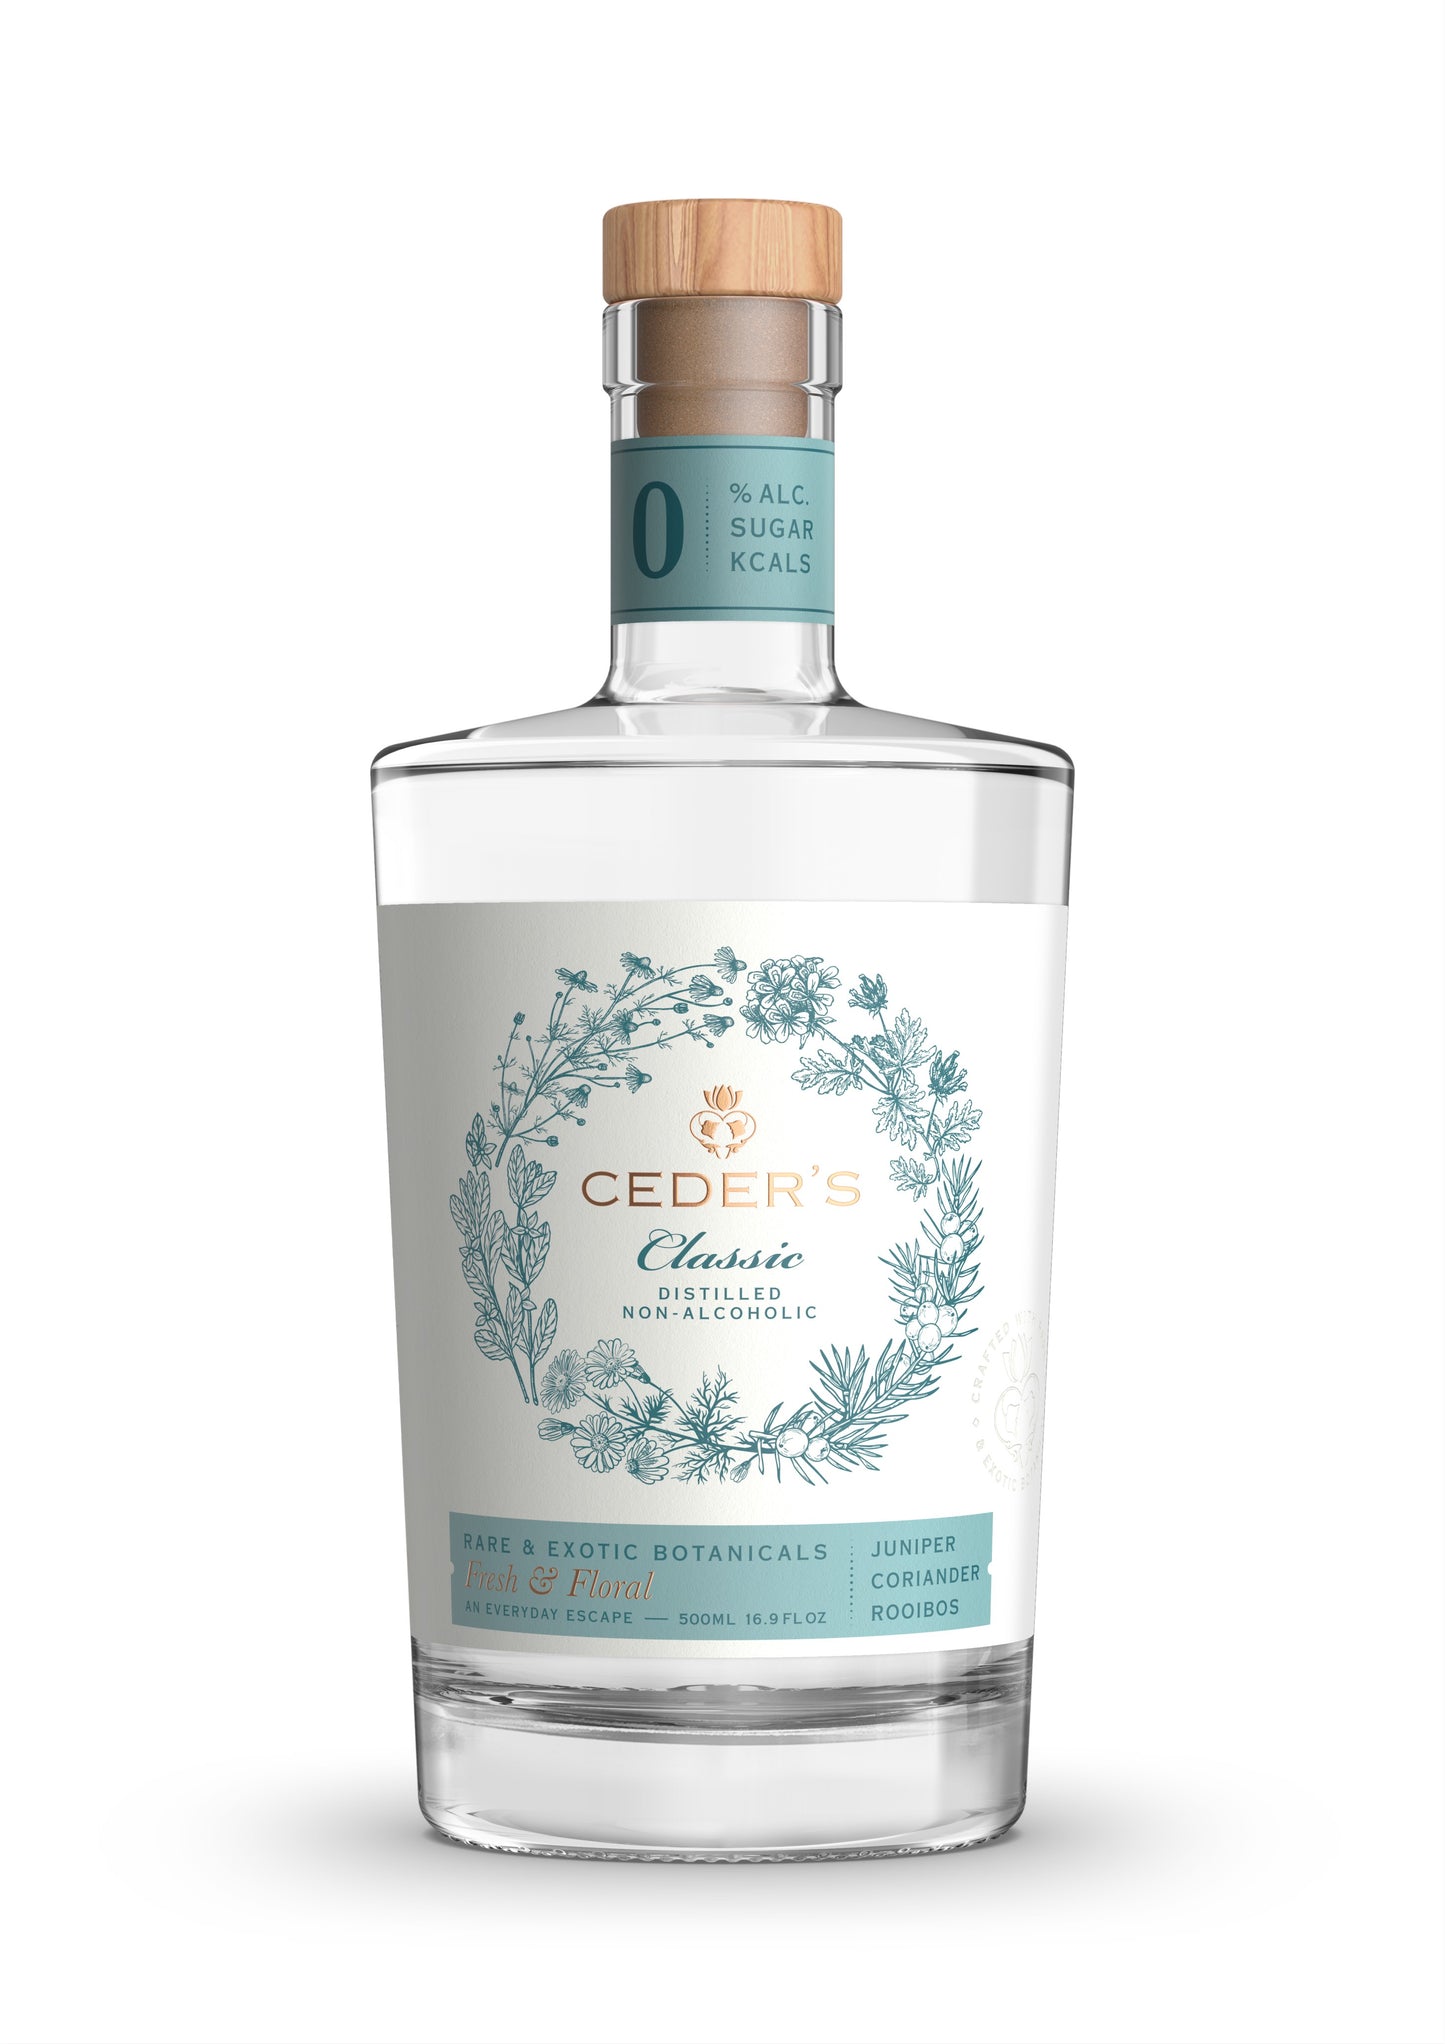 Ceder's - Classic Non-Alcoholic Gin